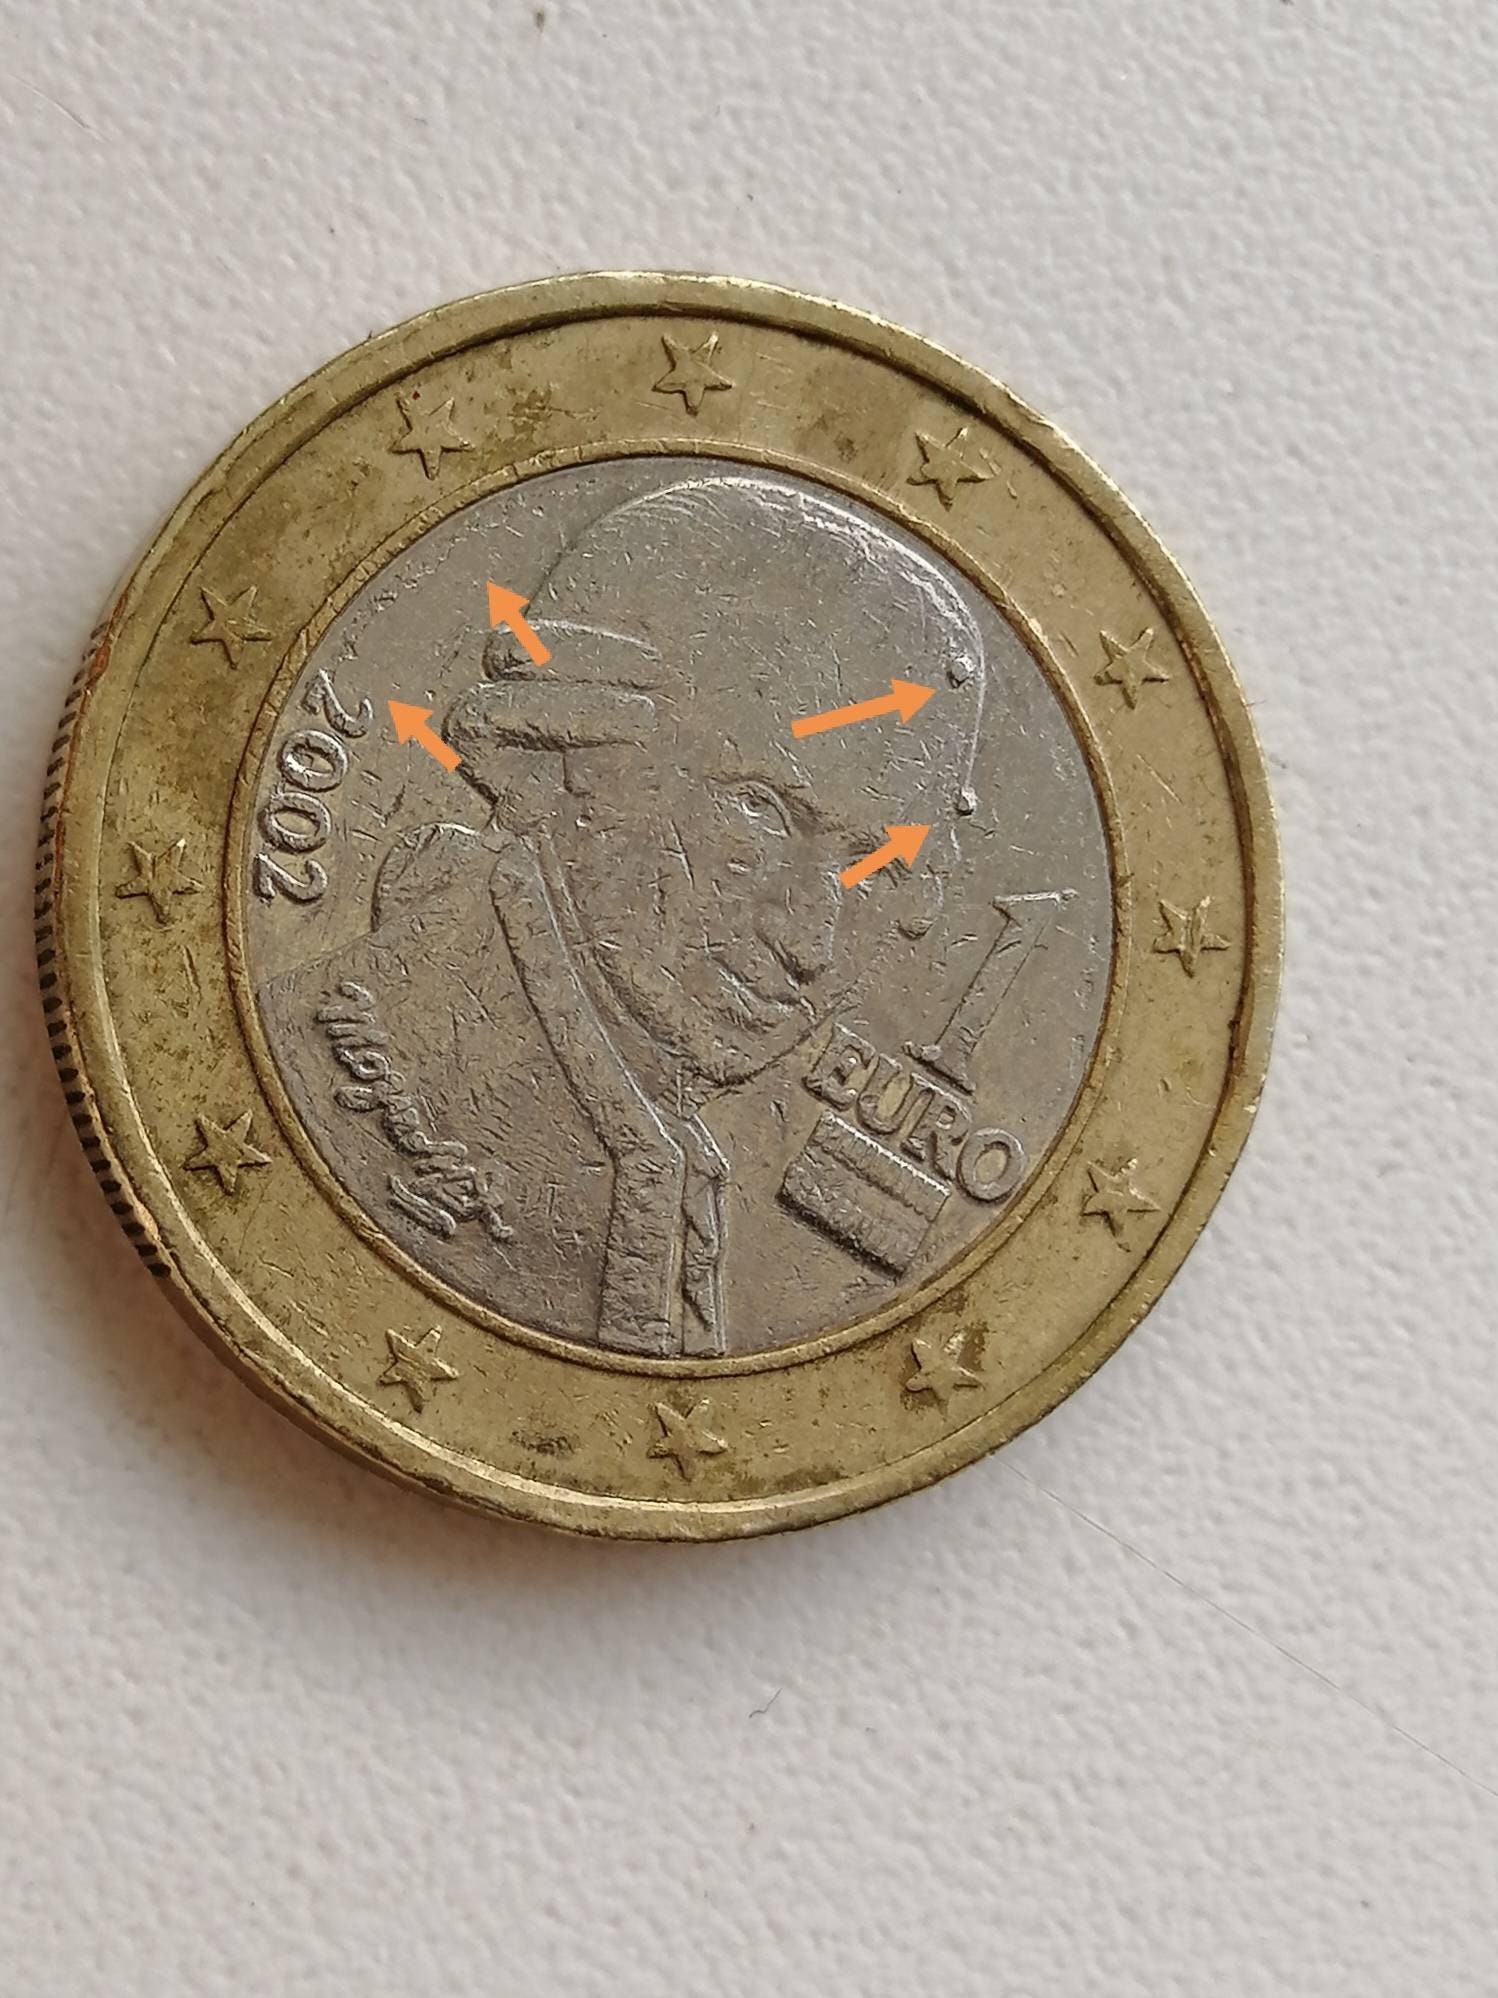 Fehler 1 Euro 2002 Österreich-Münze. - .de